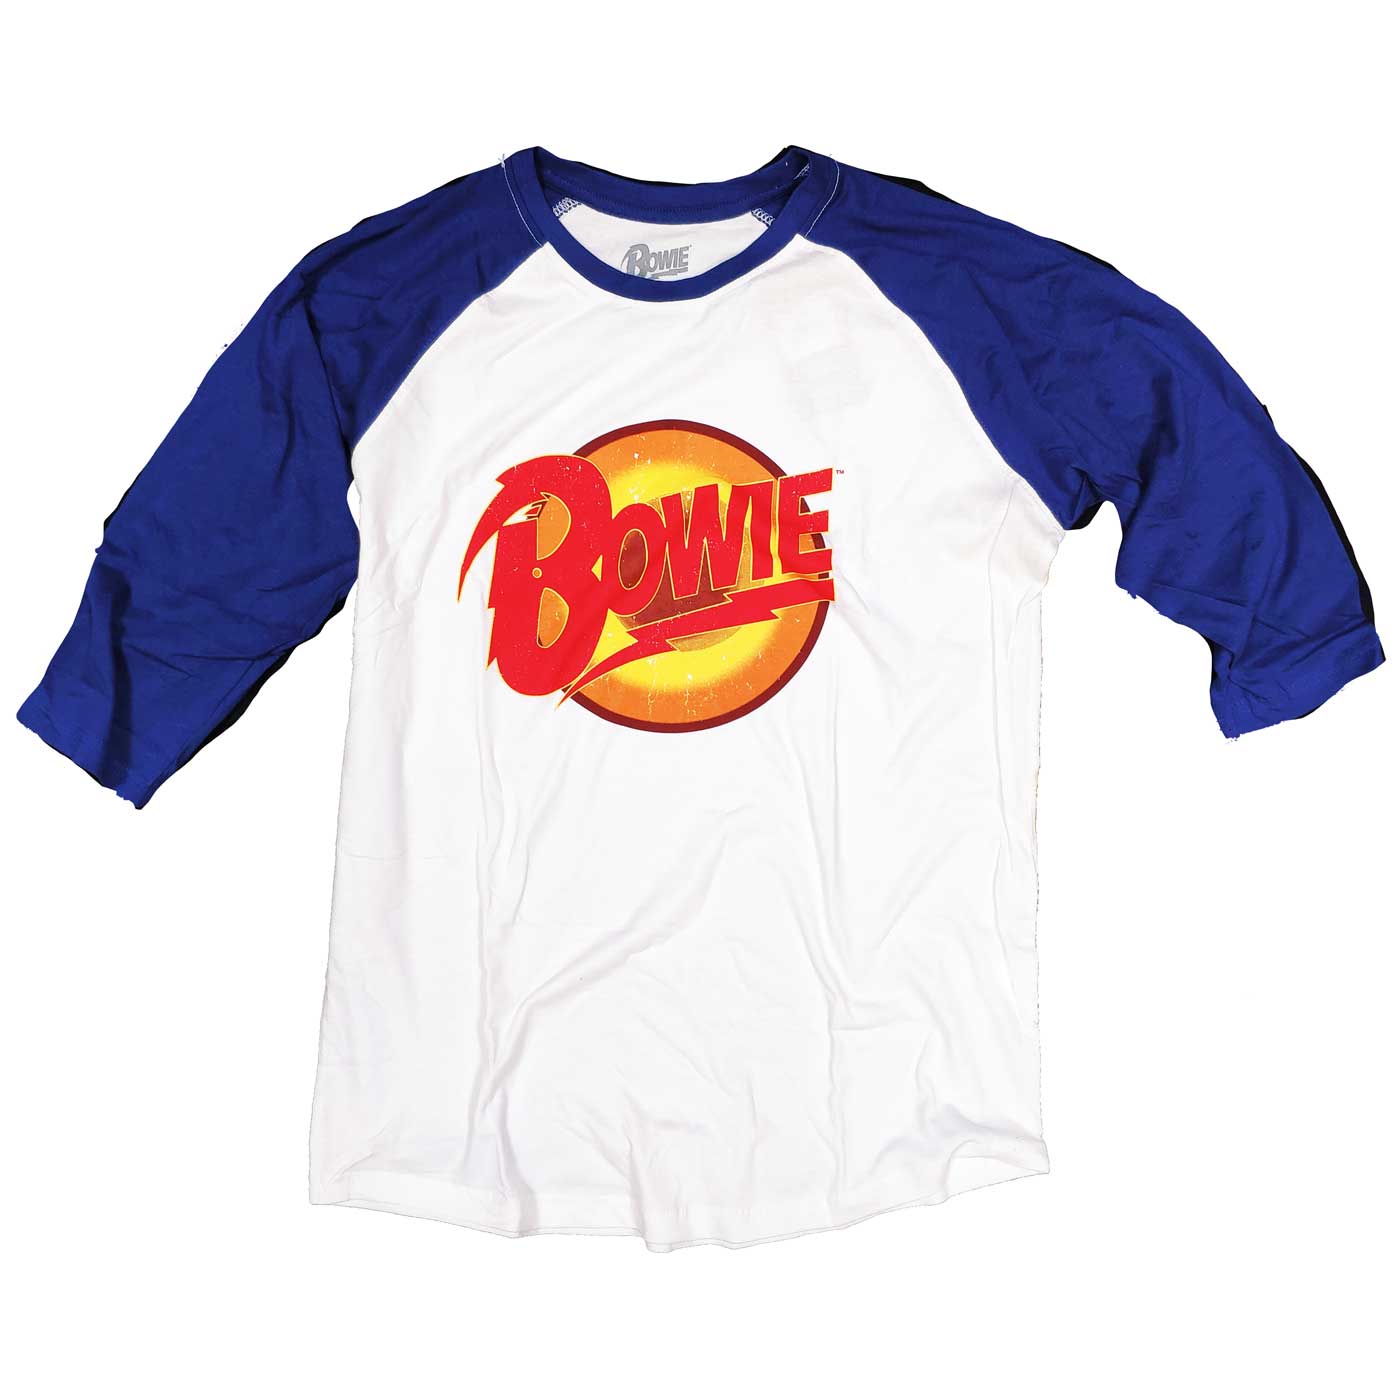 David Bowie T Shirt - Diamond Dogs Logo Baseball Style 100% Official